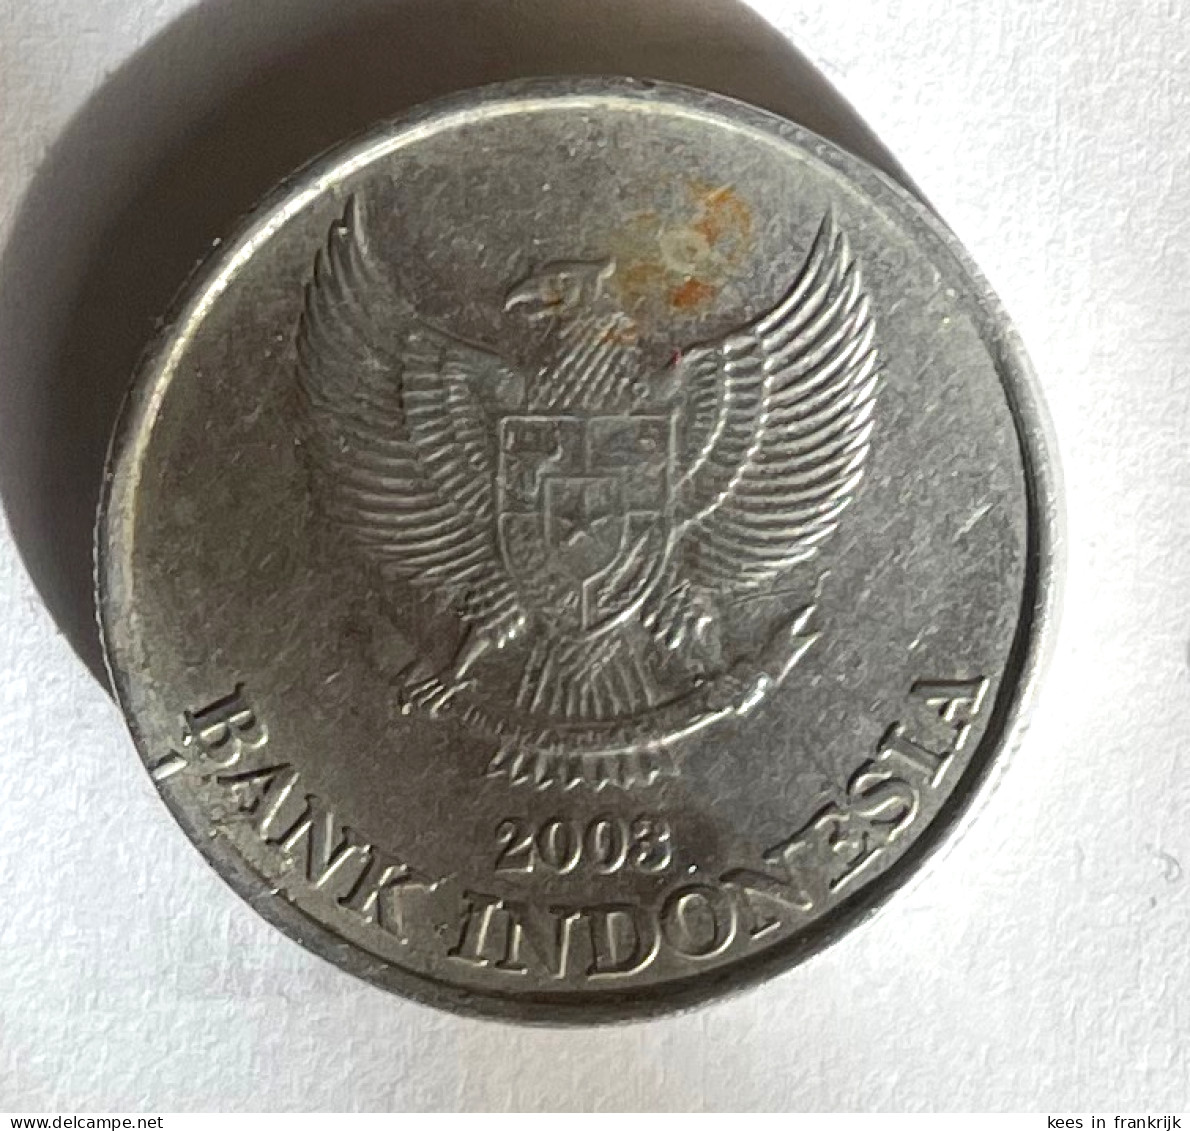 Indonesia - 500 Rupiah 2003 - Indonesien